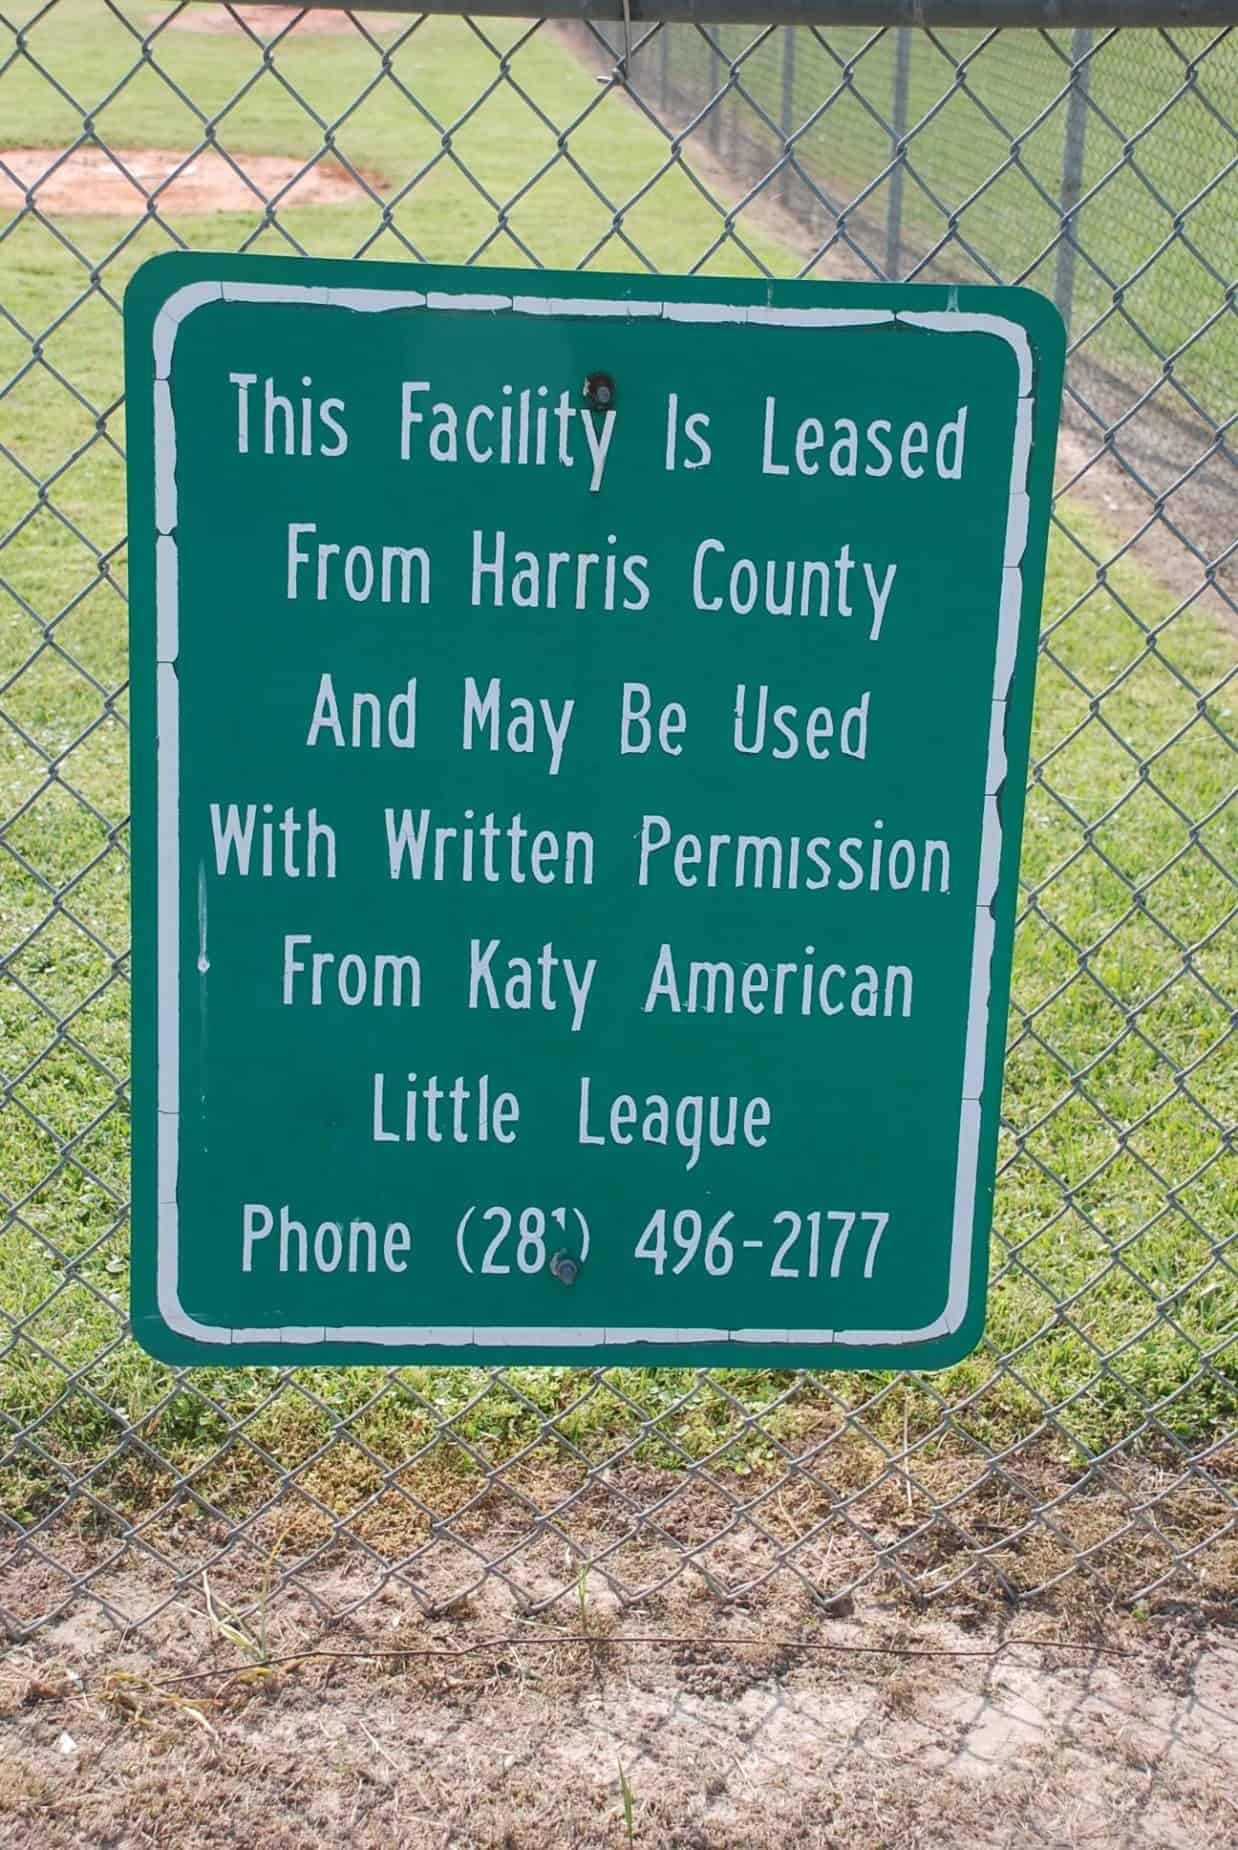 Baseball field signage at Katy Park Katy TX